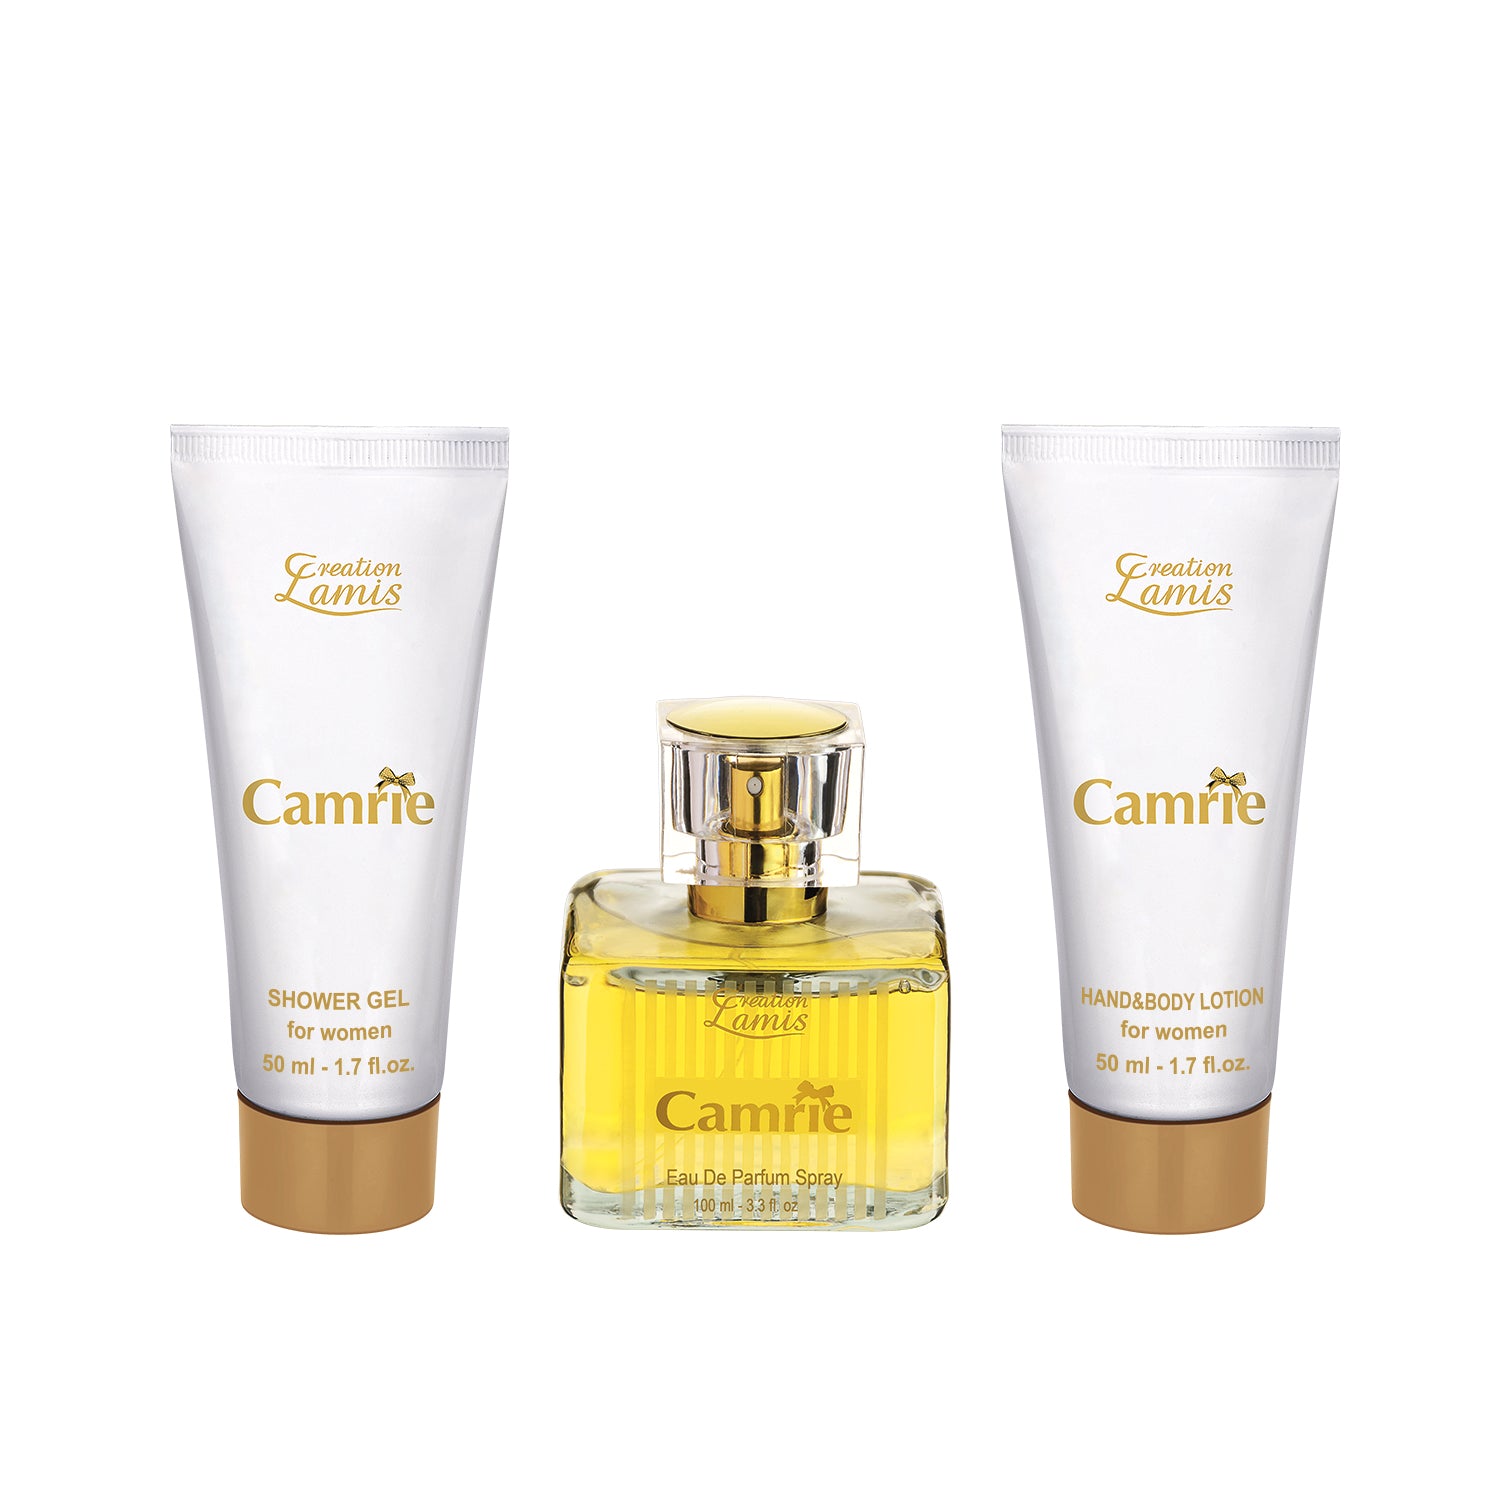 Camrie - Gift Set for Women